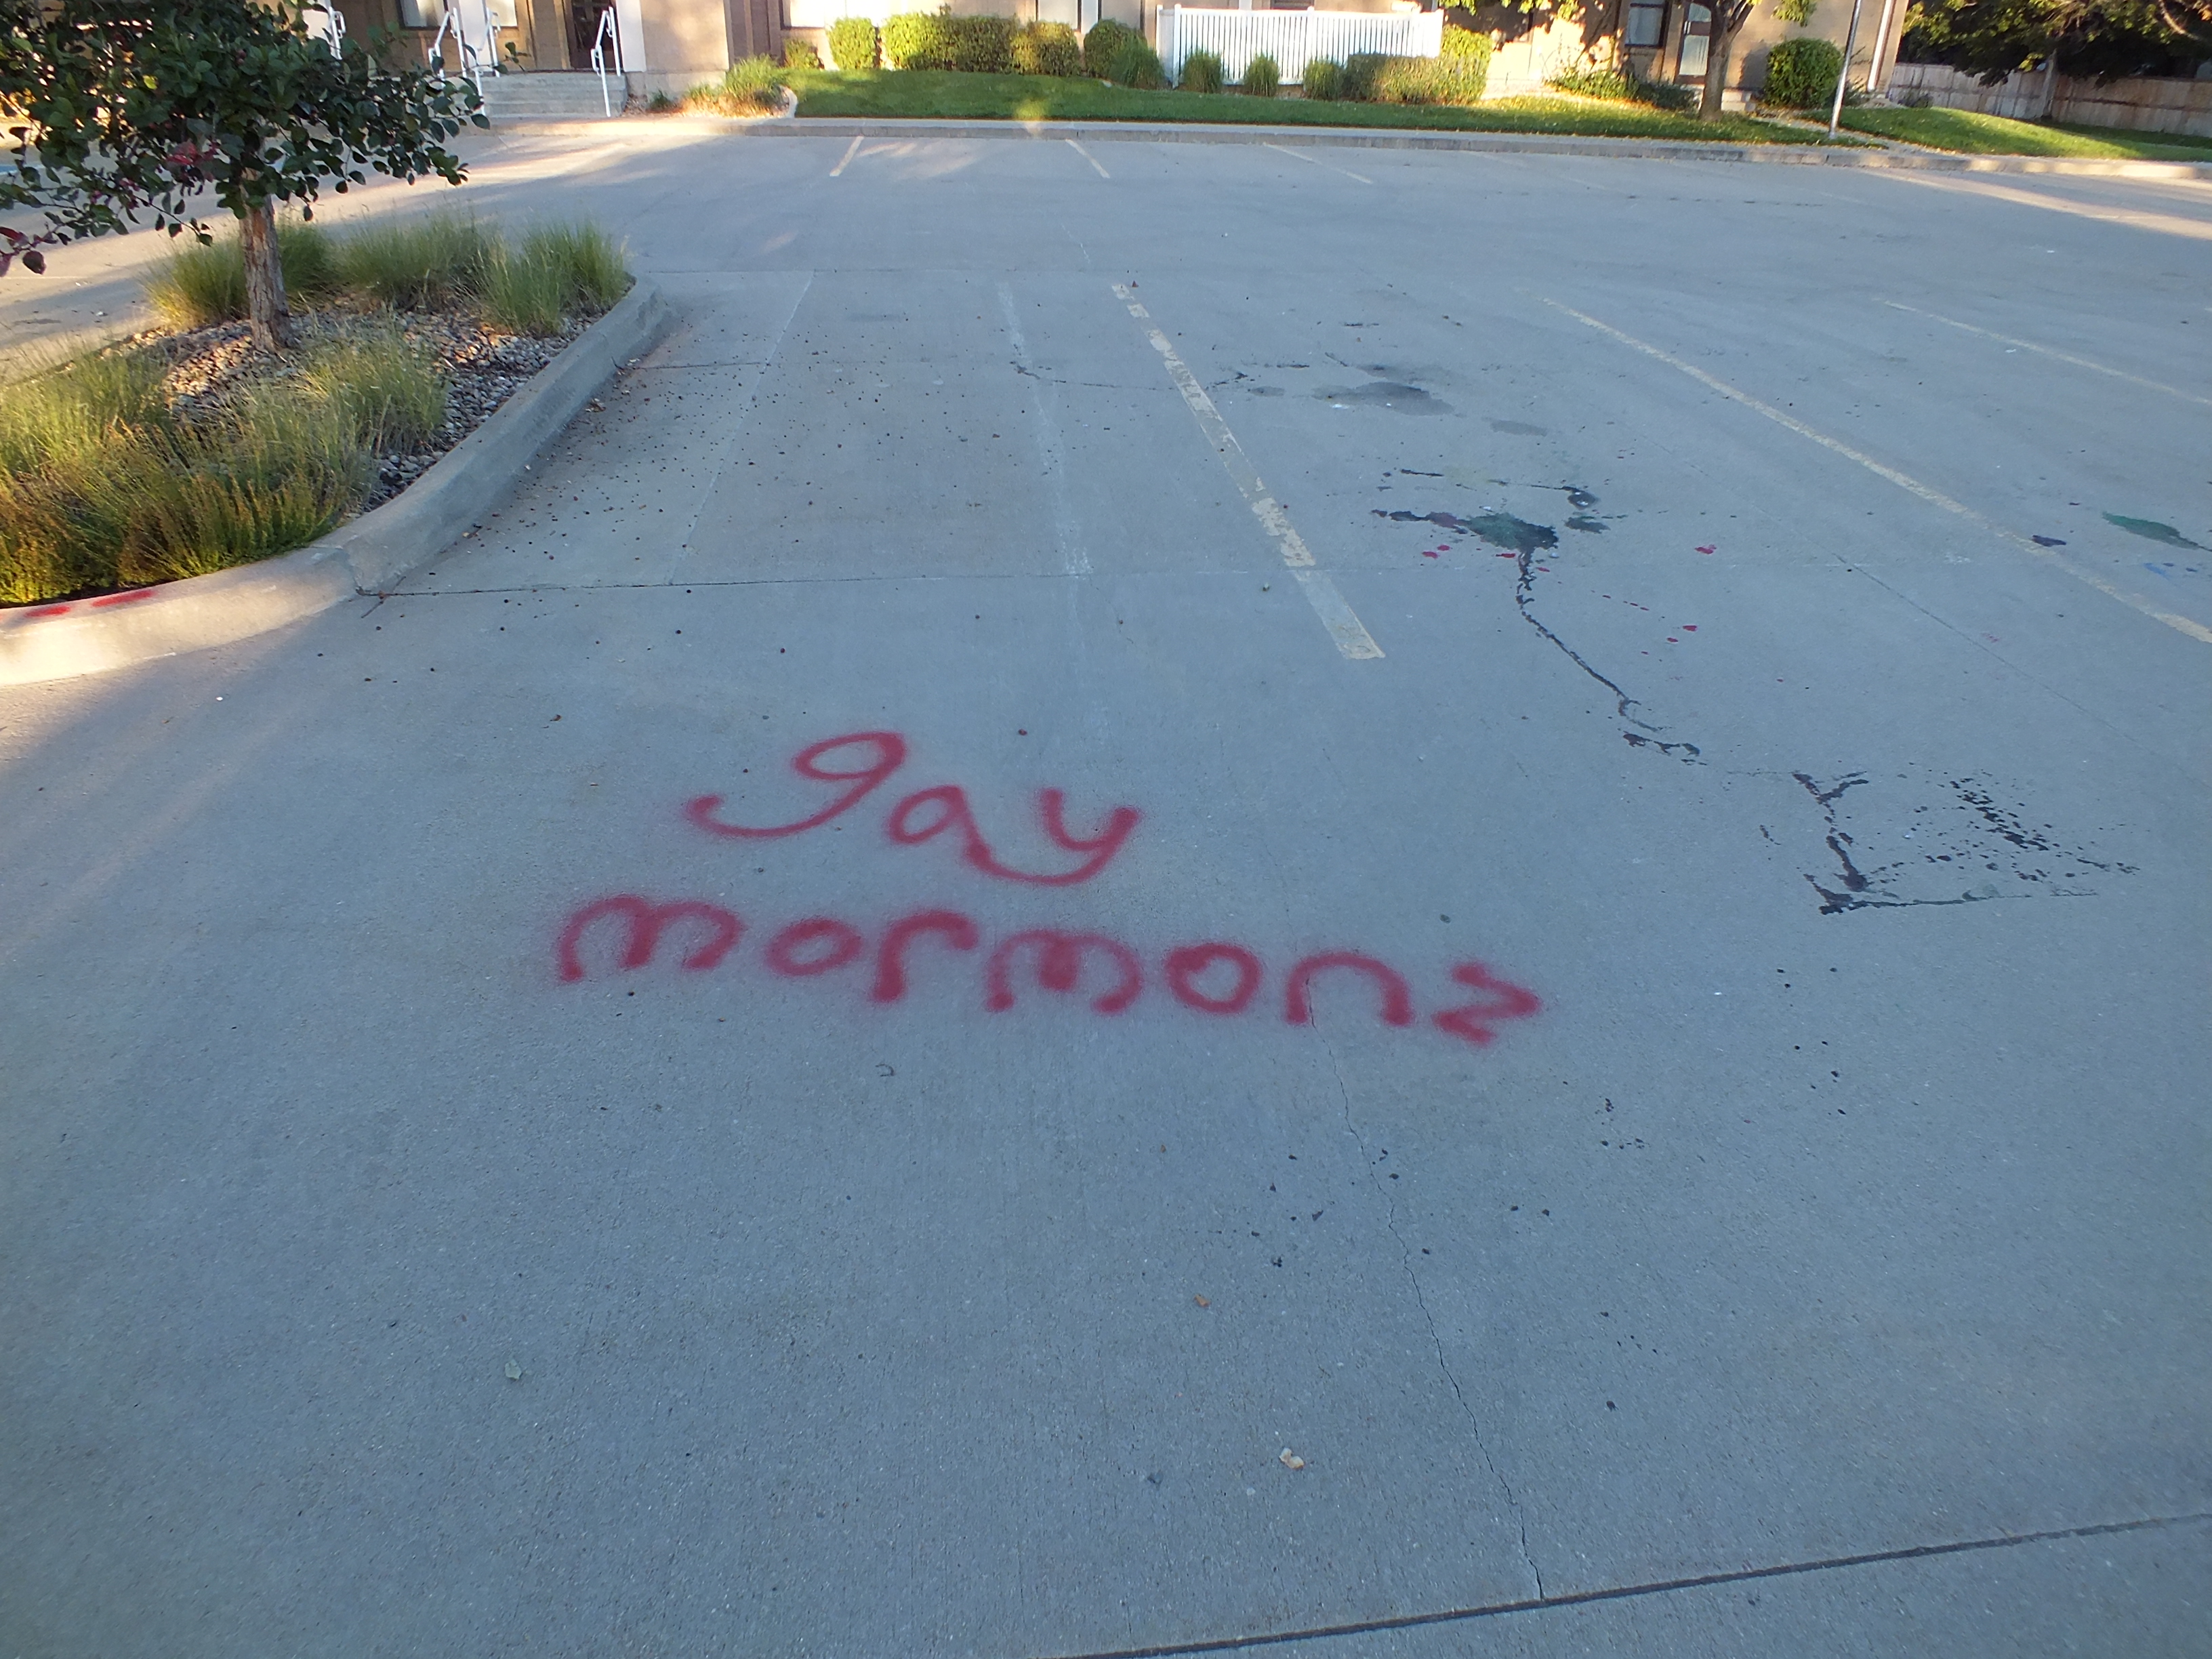 Image 3: red graffiti on pavement that says 